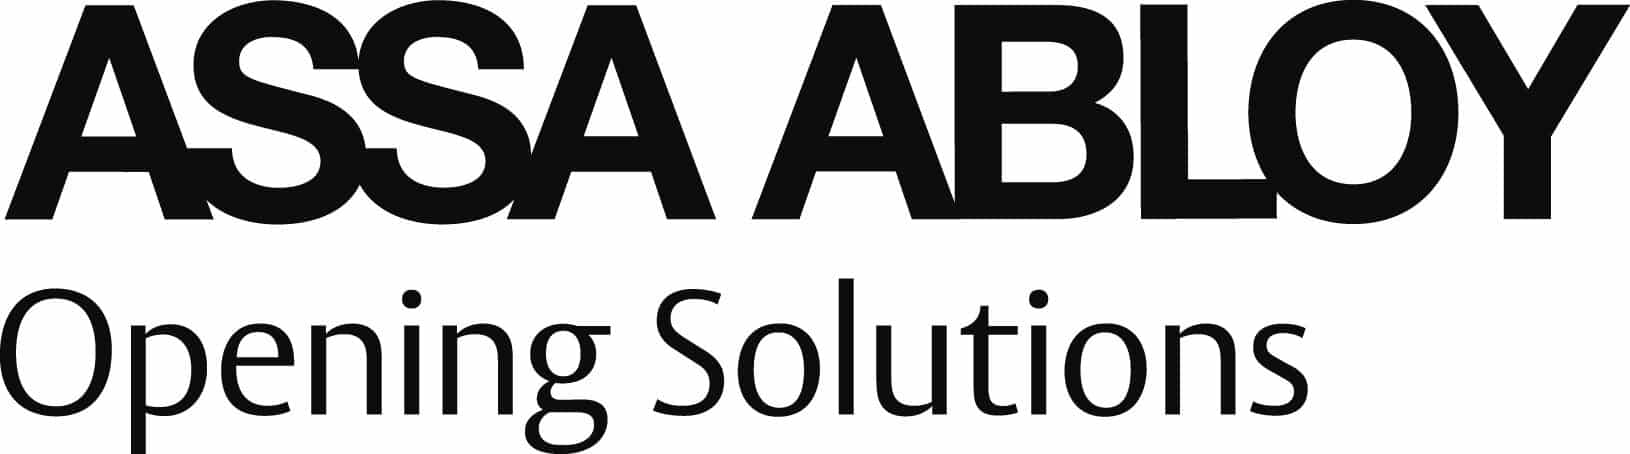 ASSA ABLOY_Opening_Solutions_black.jpg